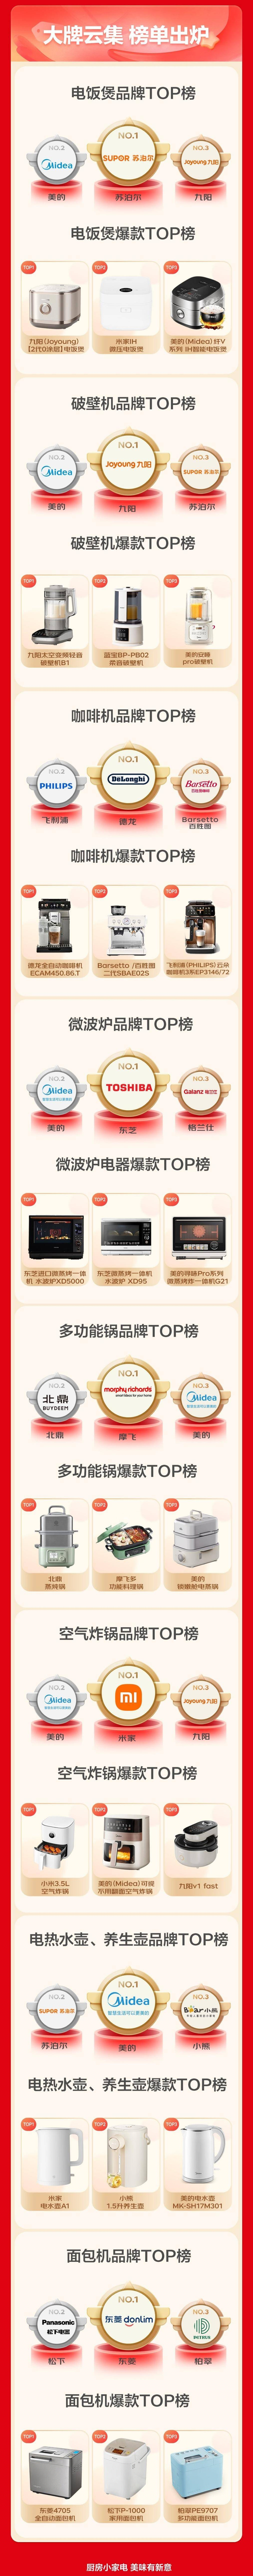 ky体育京东618厨房小家电品类爆发 微蒸烤一体机4小时销售额同比增长200%(图2)